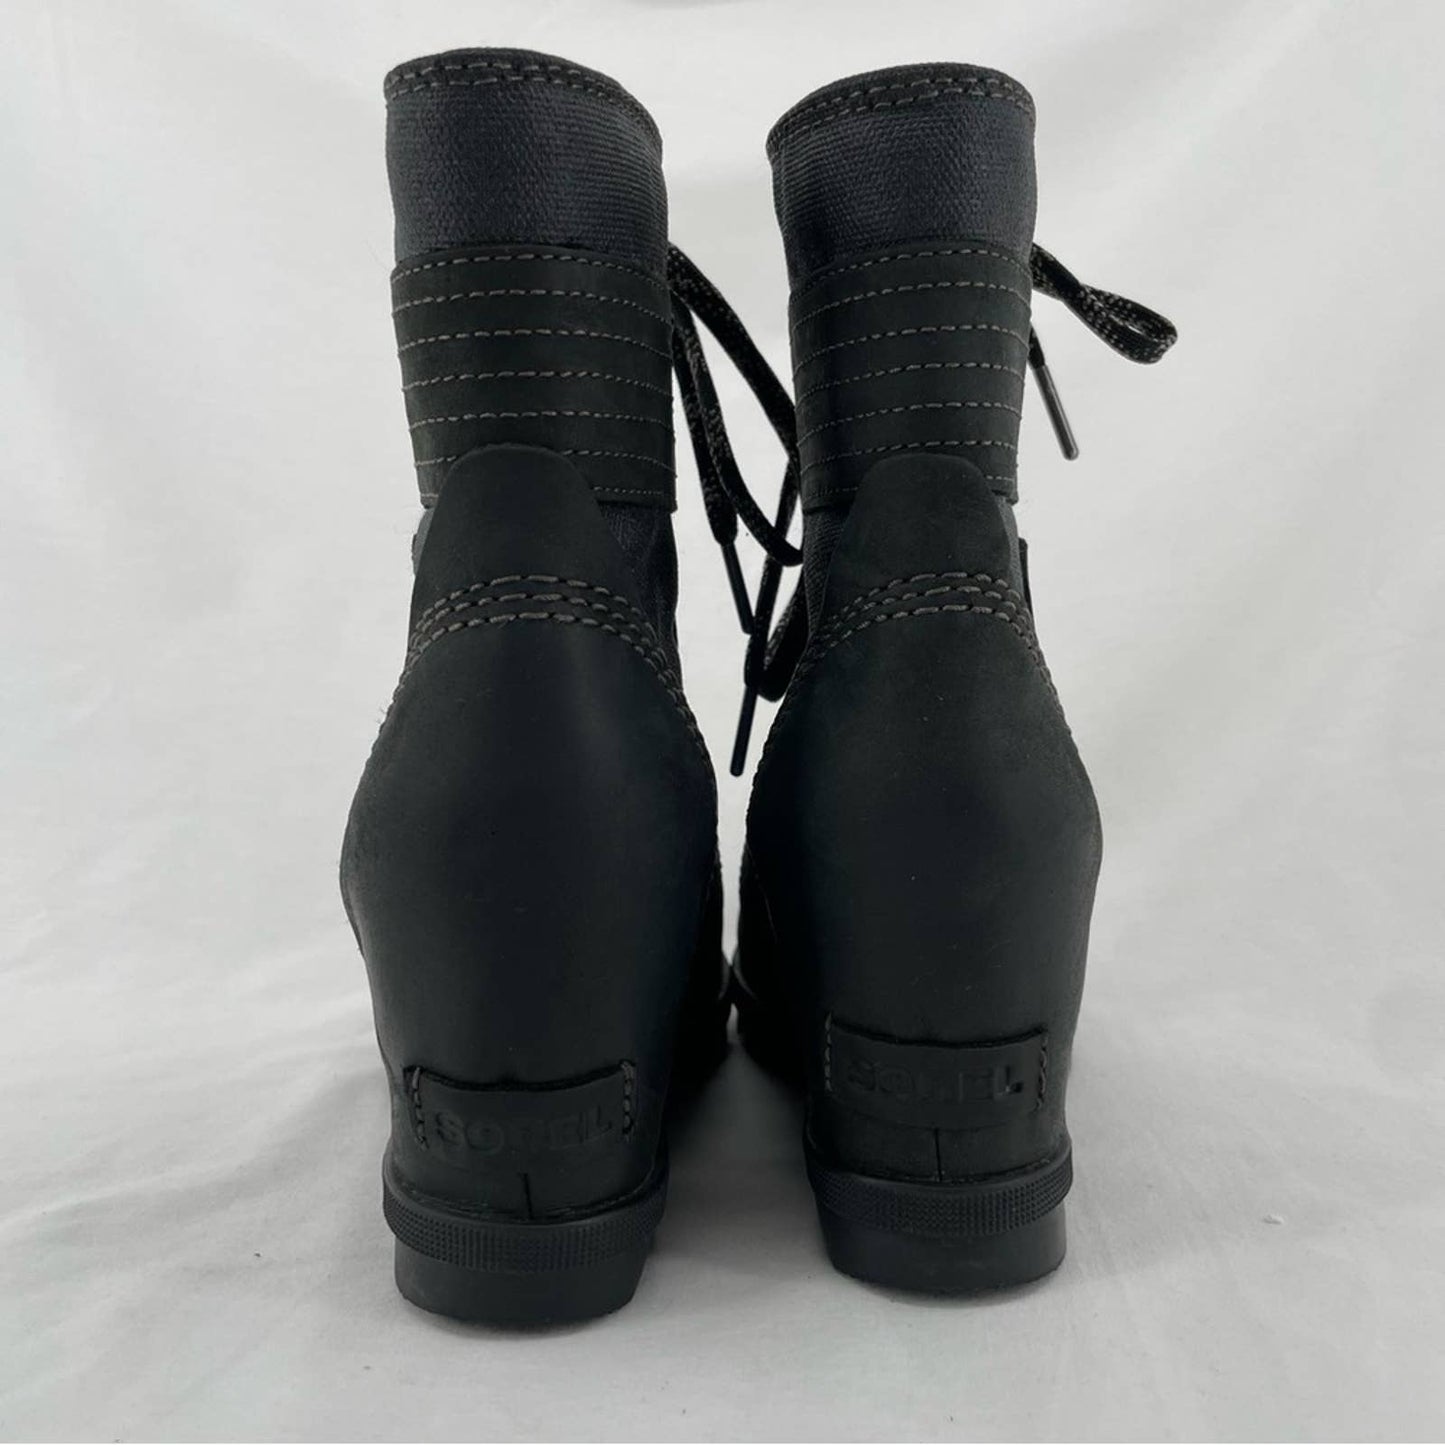 Sorel Womens Lexie Wedge Boot Black Leather Waterproof Canvas Winter Booties Size 8.5